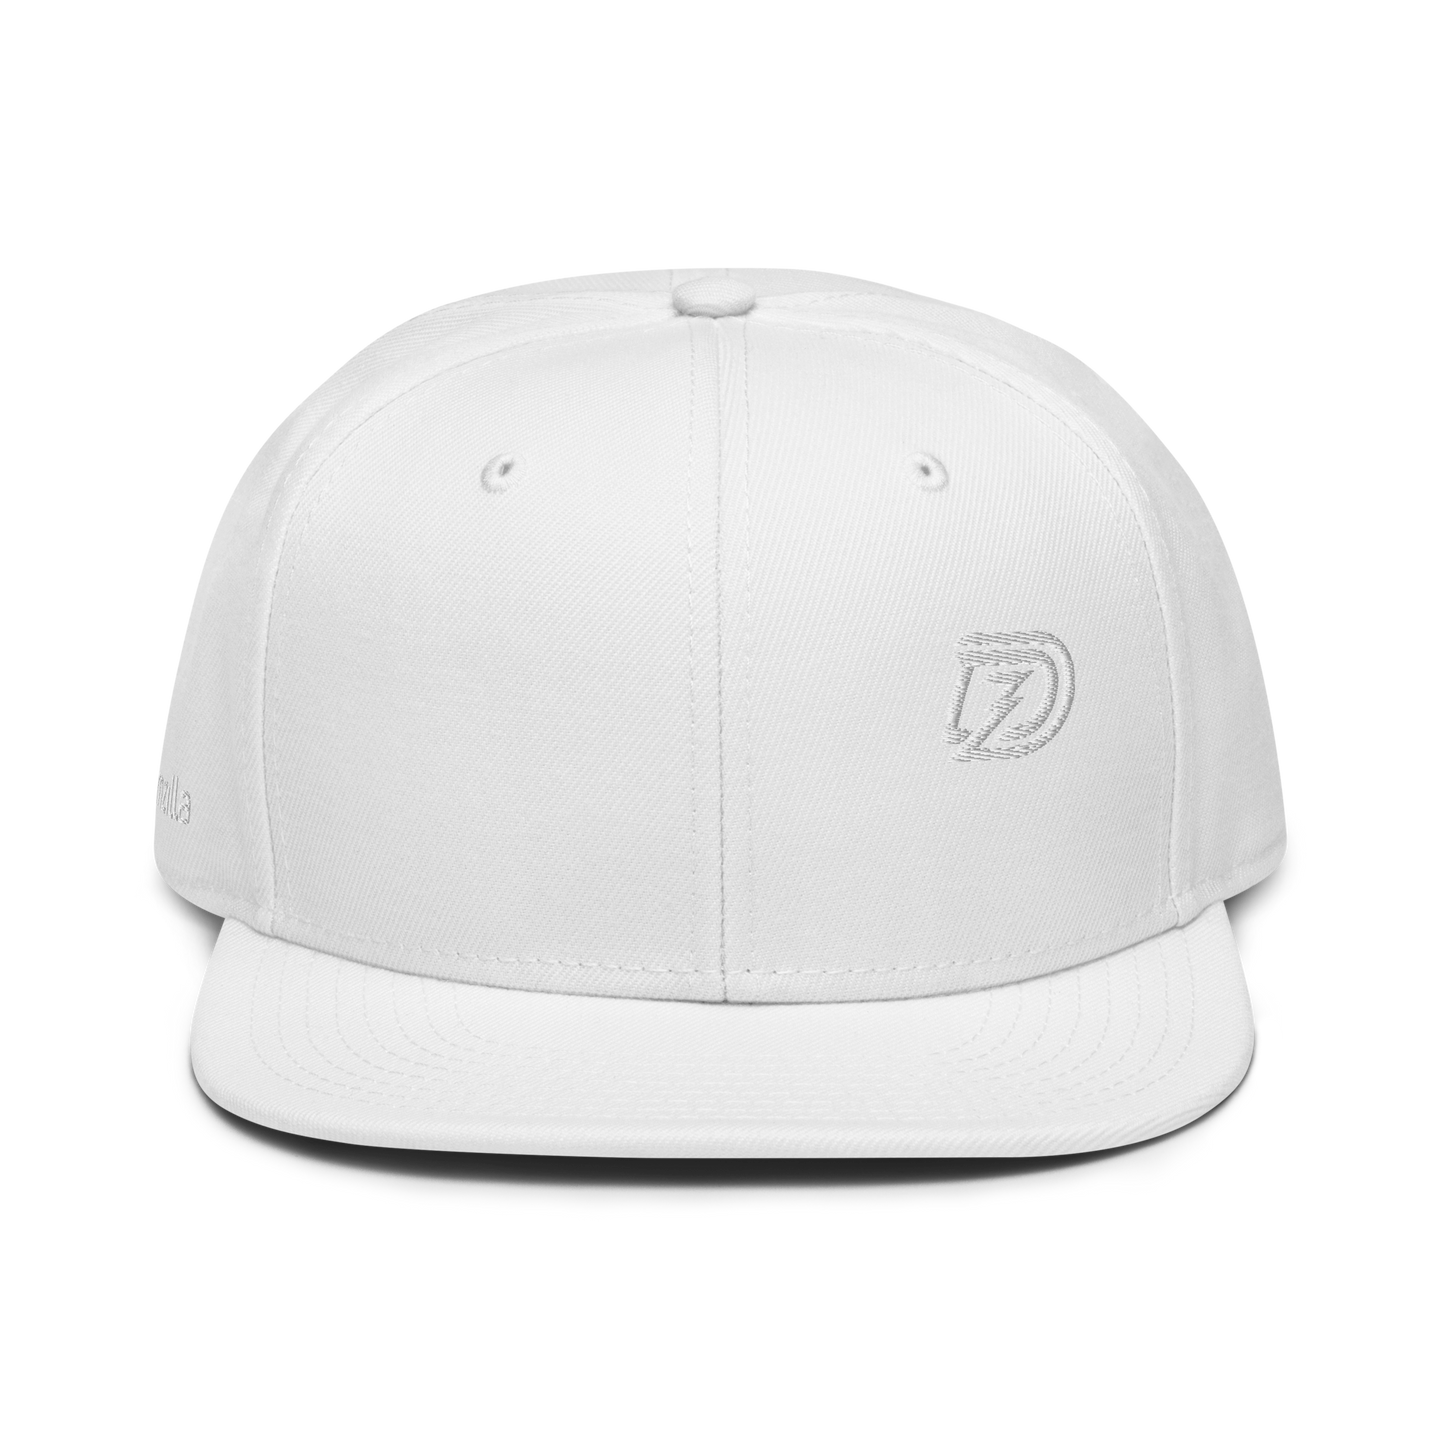 DZ Monochrome Snapback in White